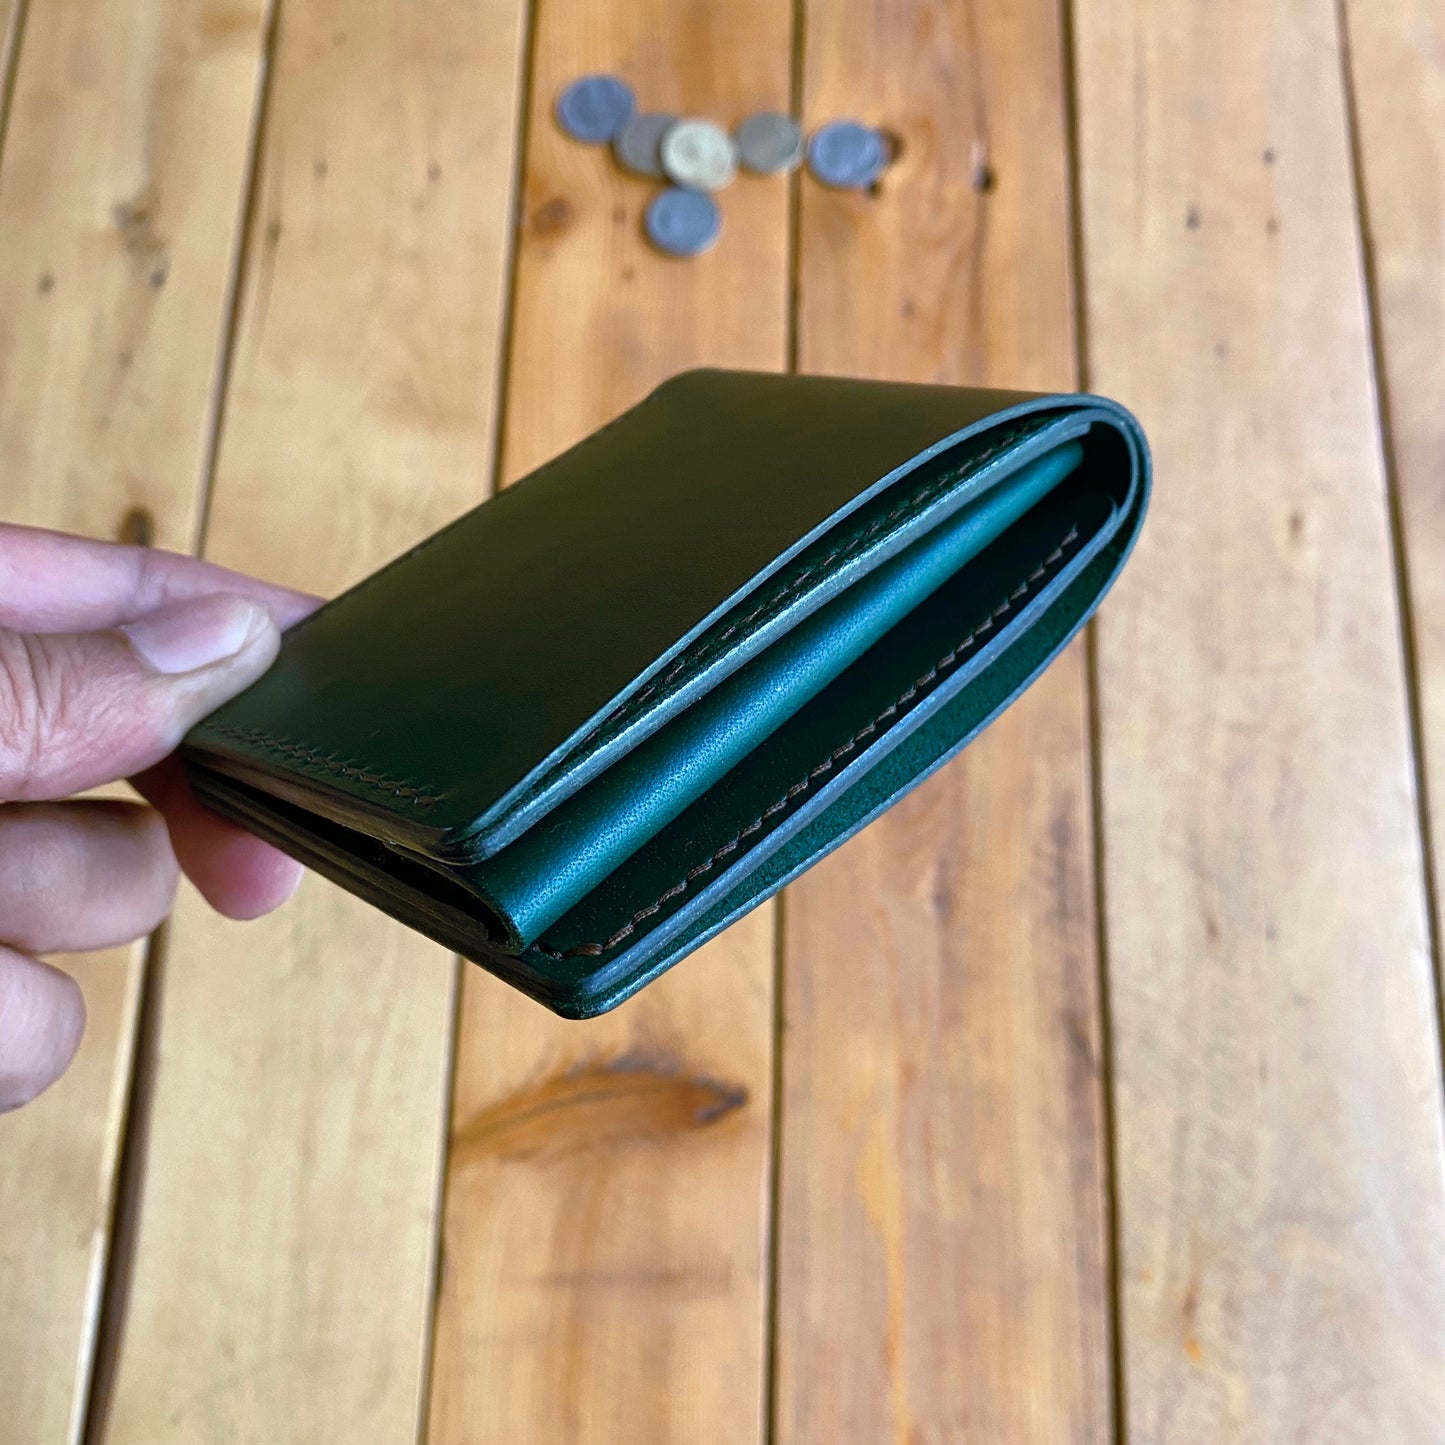 Mini Coin Pocket Wallet - Racing Green